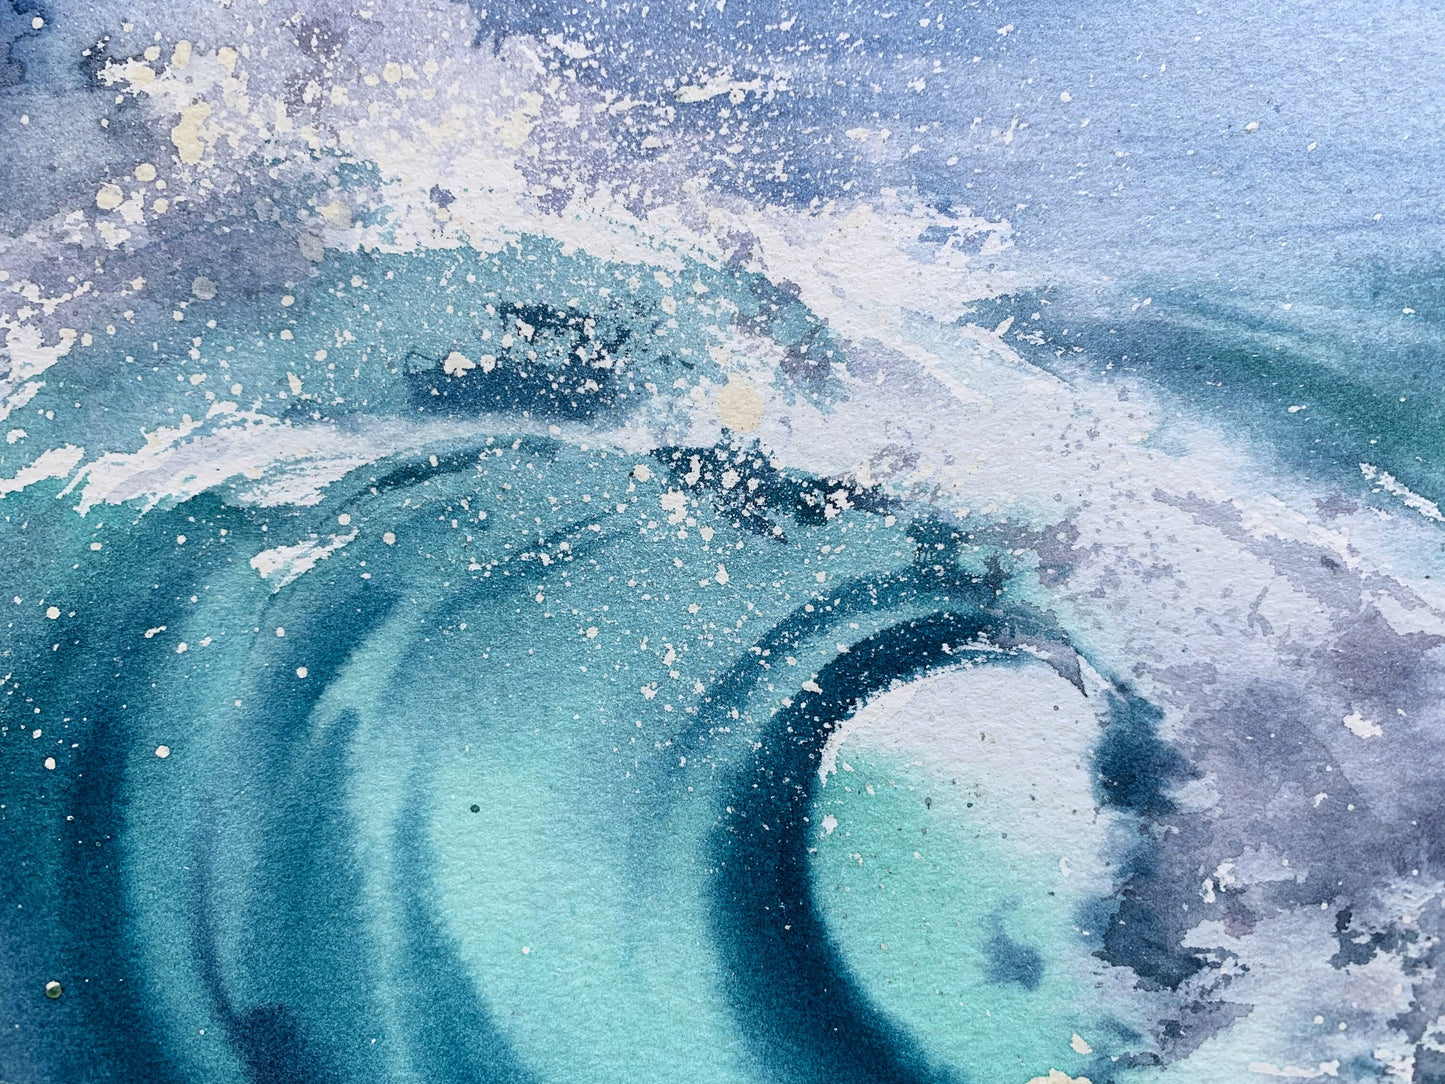 Ocean Wave Painting, Watercolor Original, Blue Sea Waves, Beach Wall Decor, Coastal Wall Art, Gift For Him, Sea Coast, Seascape